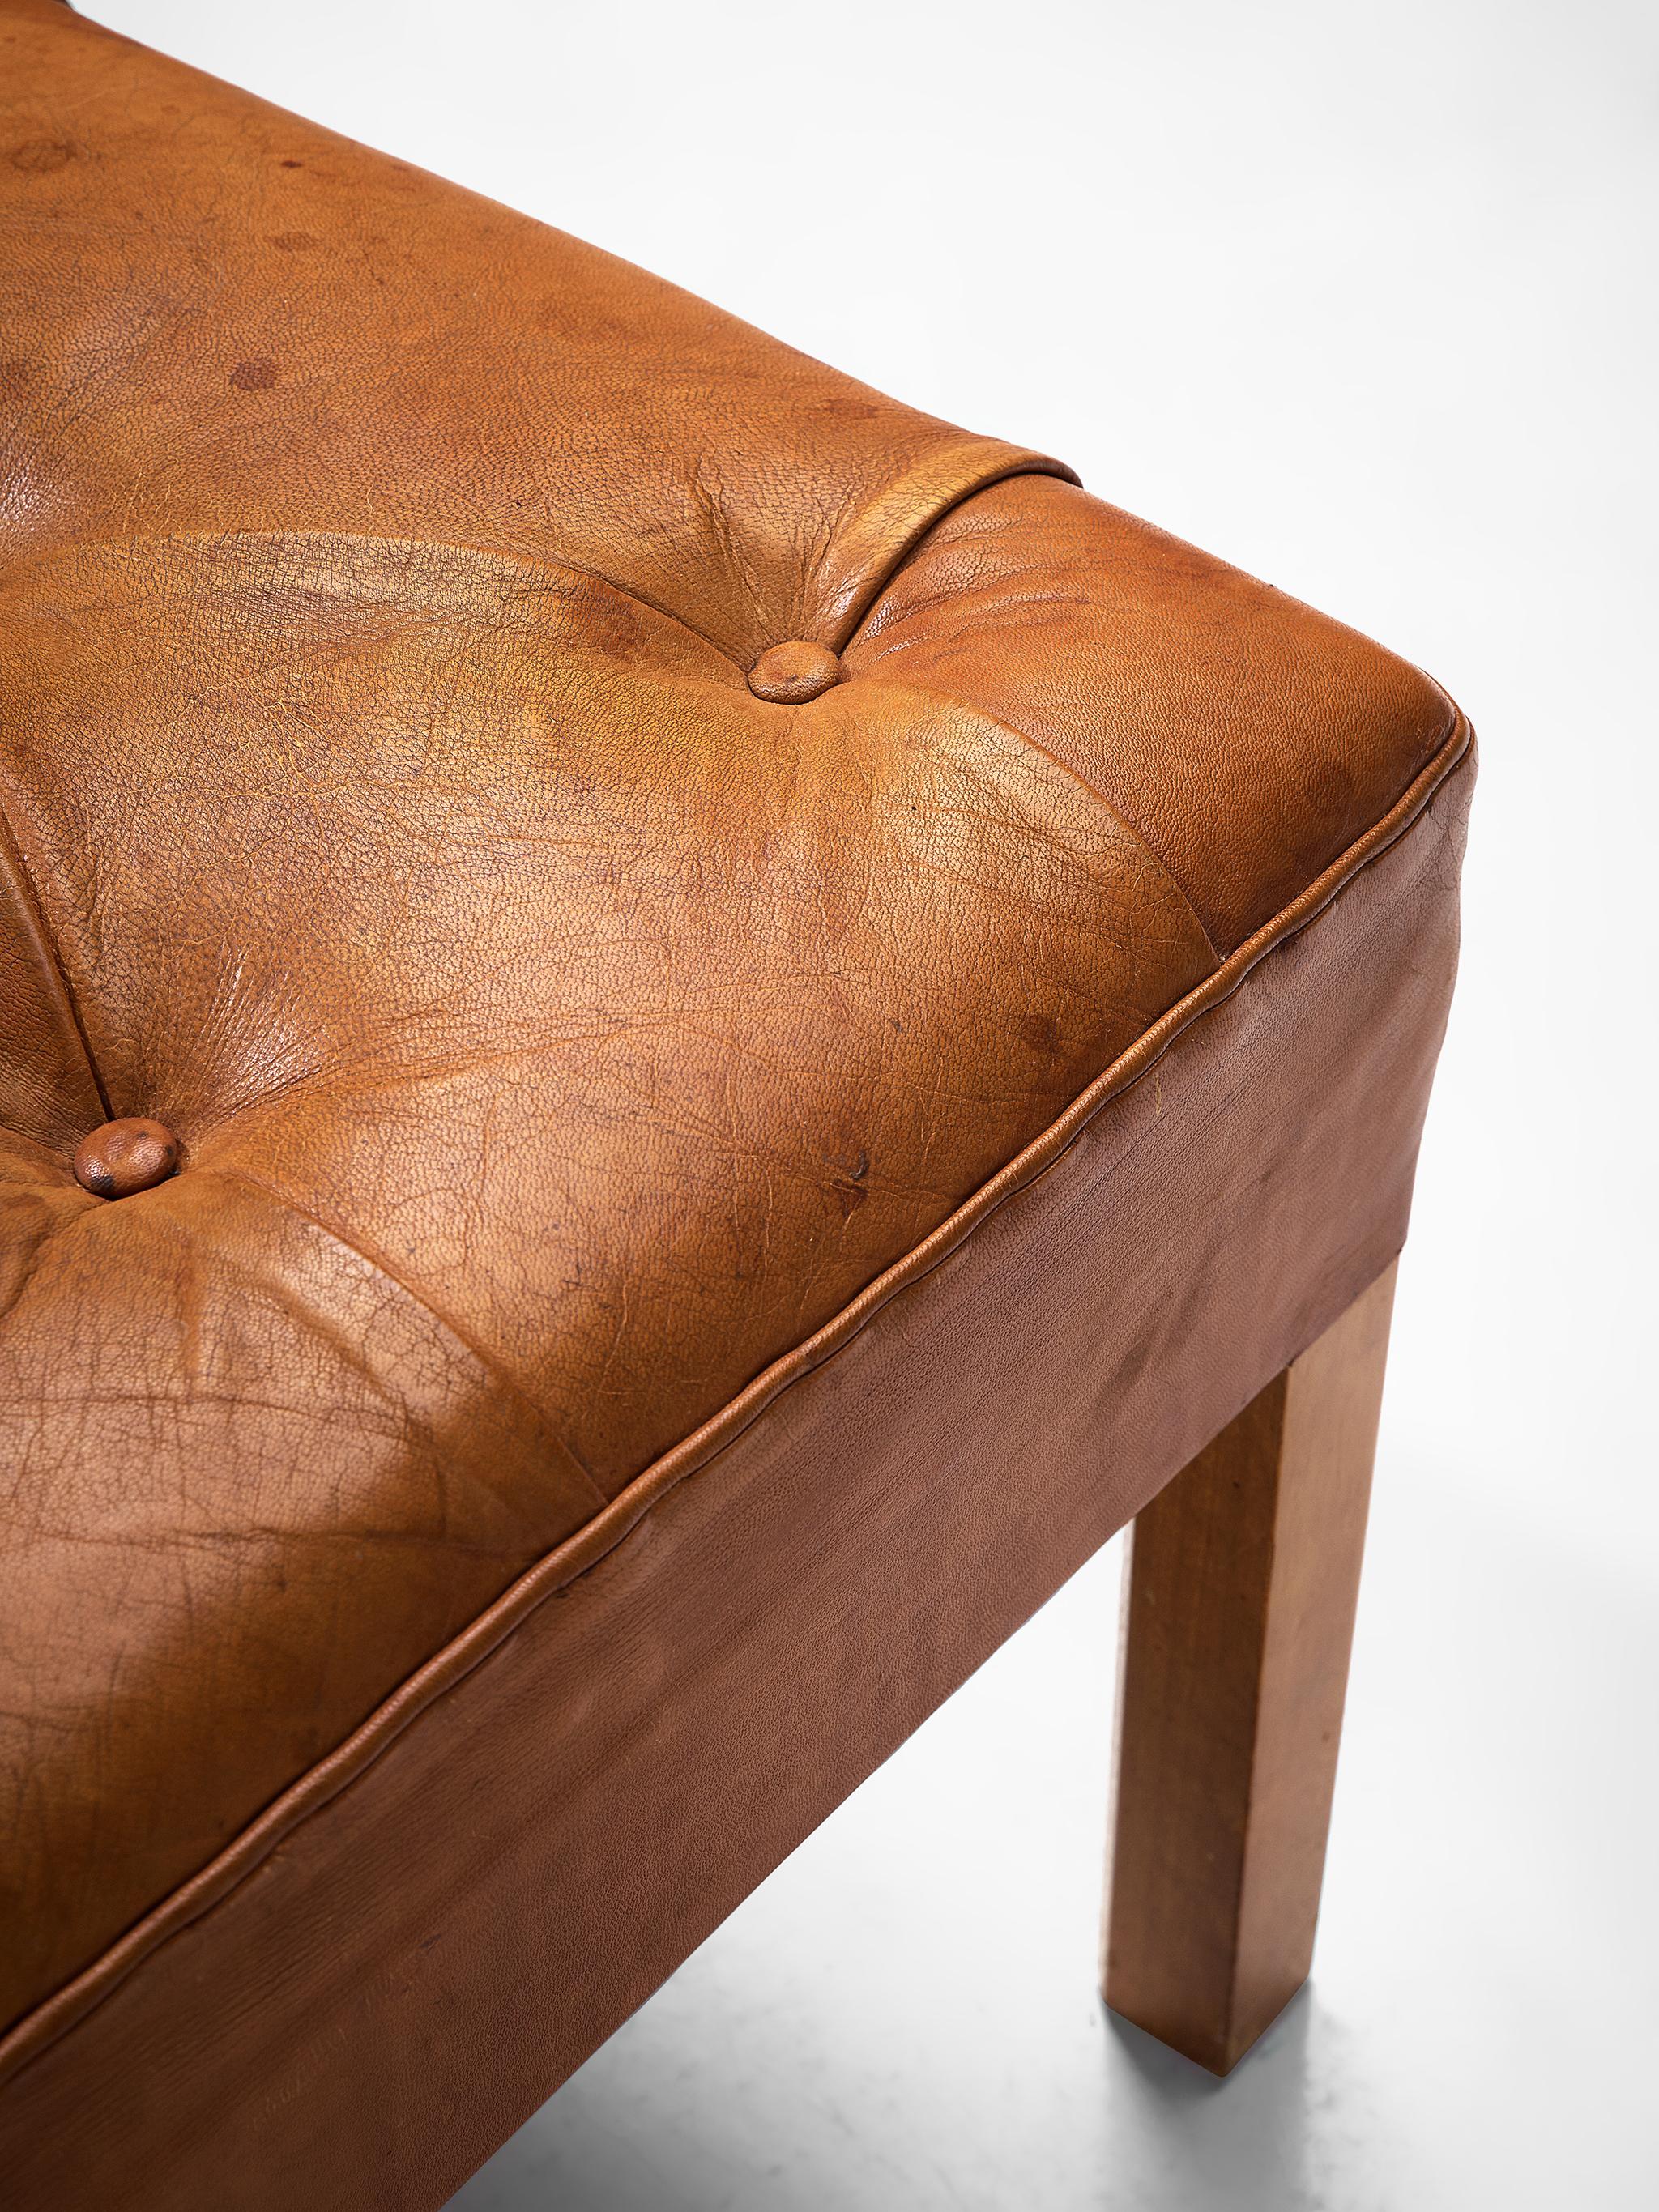 Kaare Klint 'Addition' Sofa's in Original Patinated Cognac Leather 5